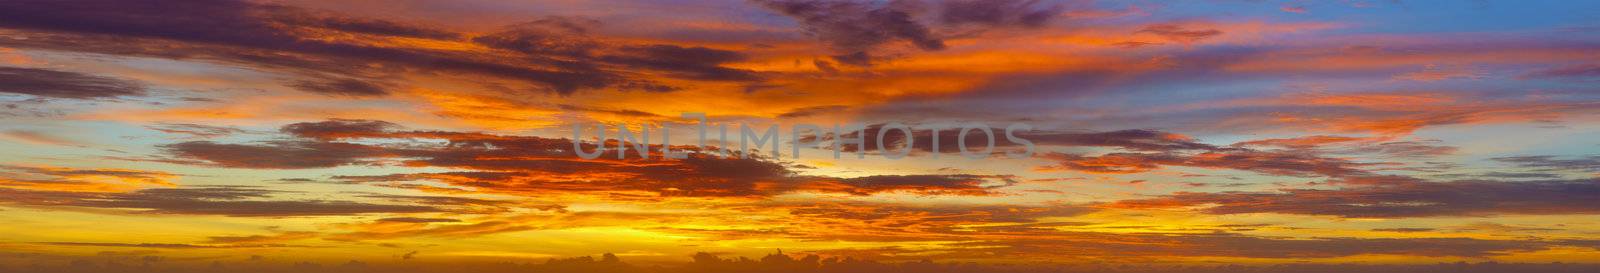 Panoramic photos of natural sky above the ocean at sunset - Thailand